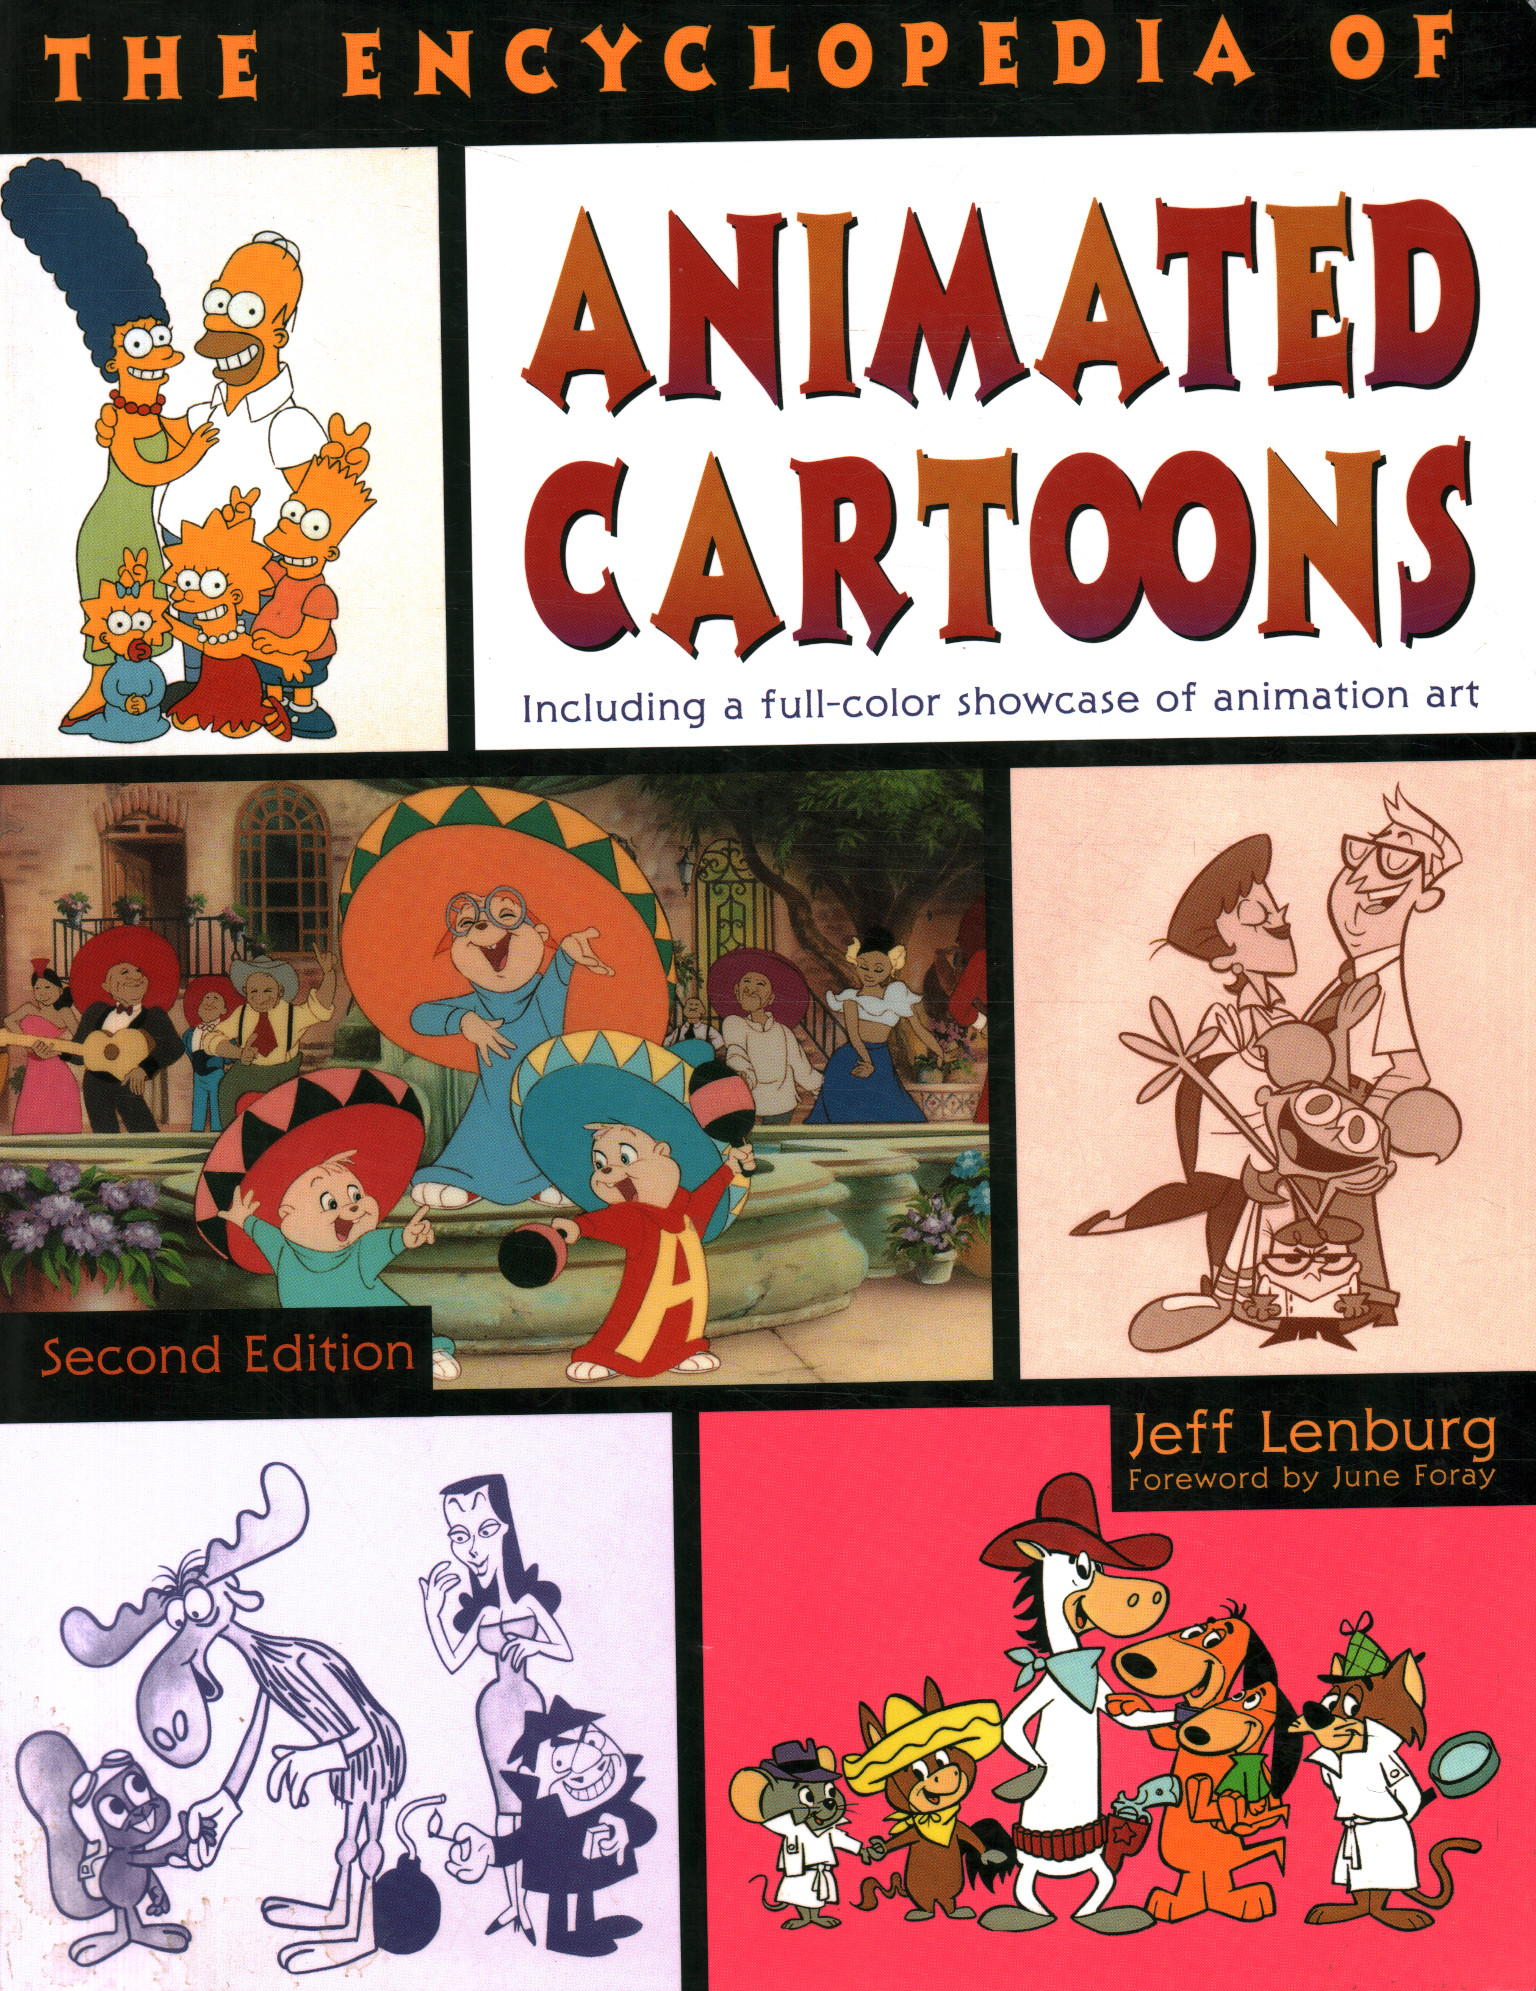 The encyclopedia of animated cartoons